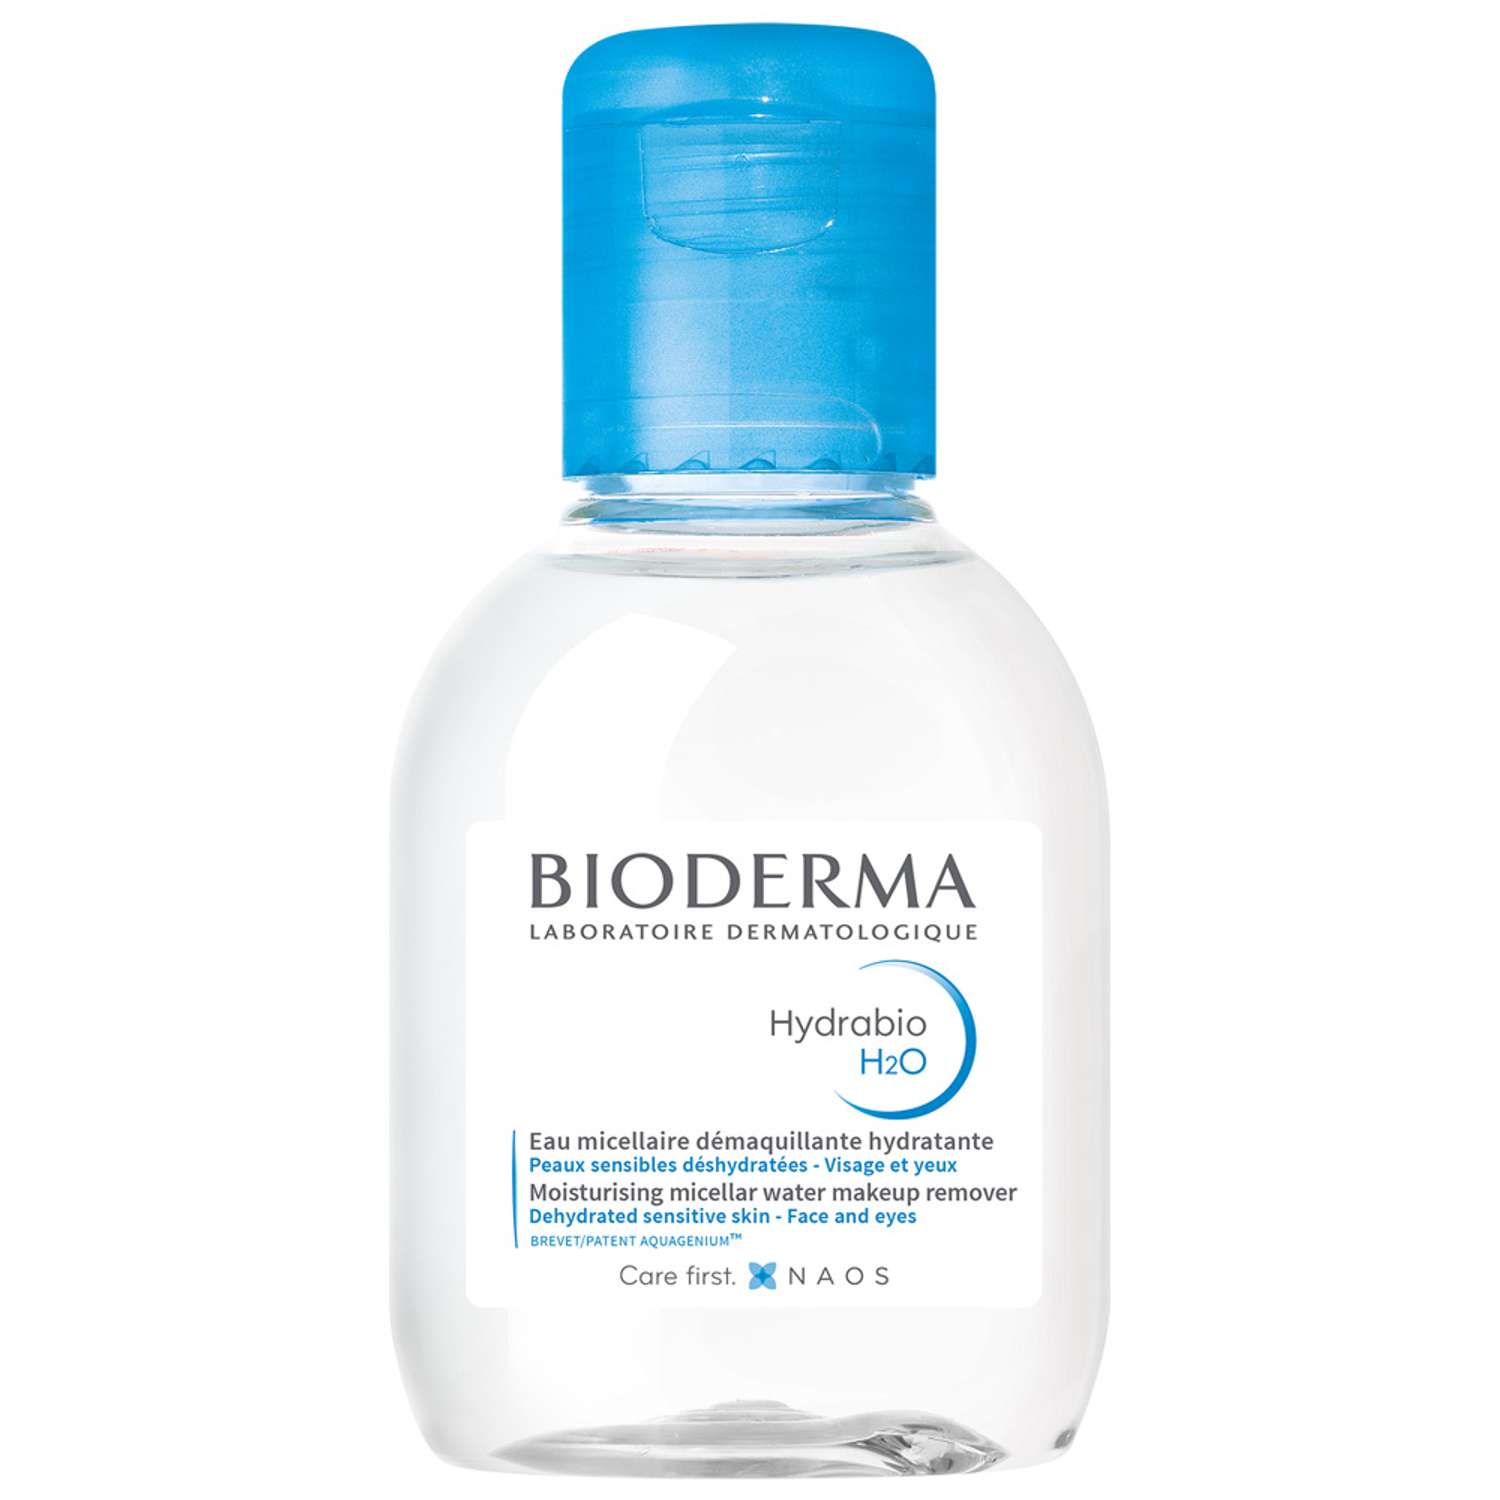 Мицеллярная вода H2O Bioderma Hydrabio очищающая для обезвоженной кожи лица 100 мл - фото 1